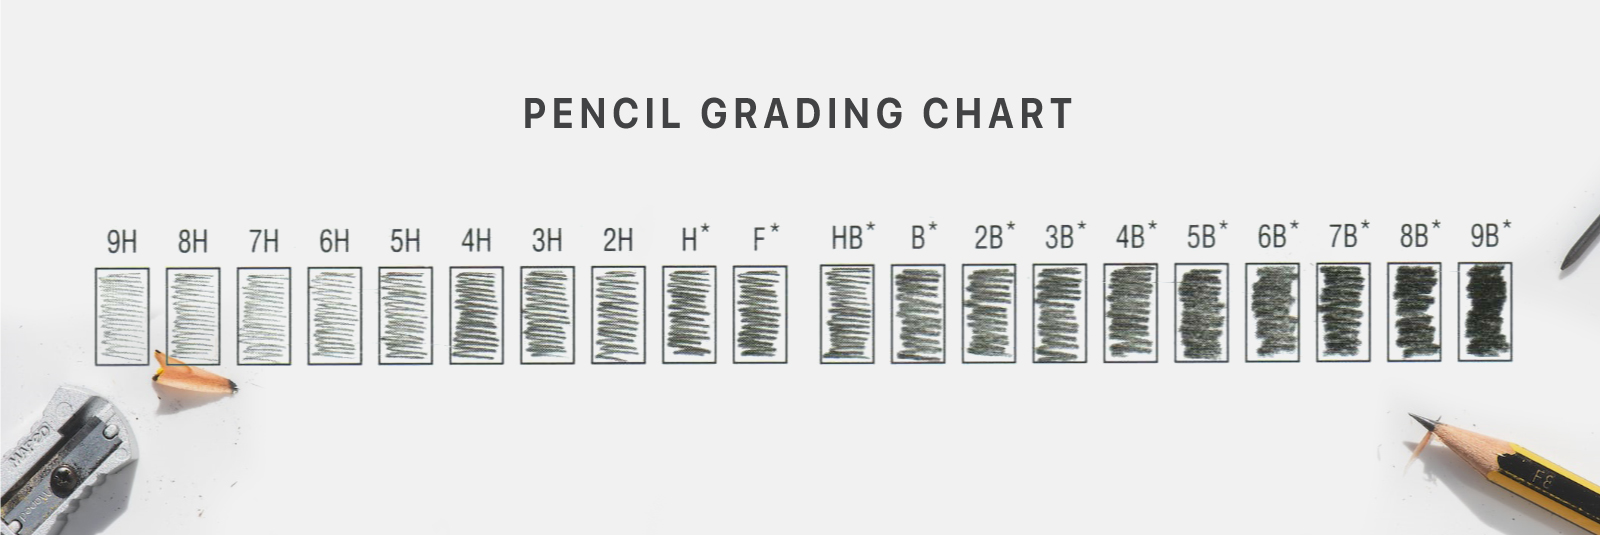 Pencil Grading Chart